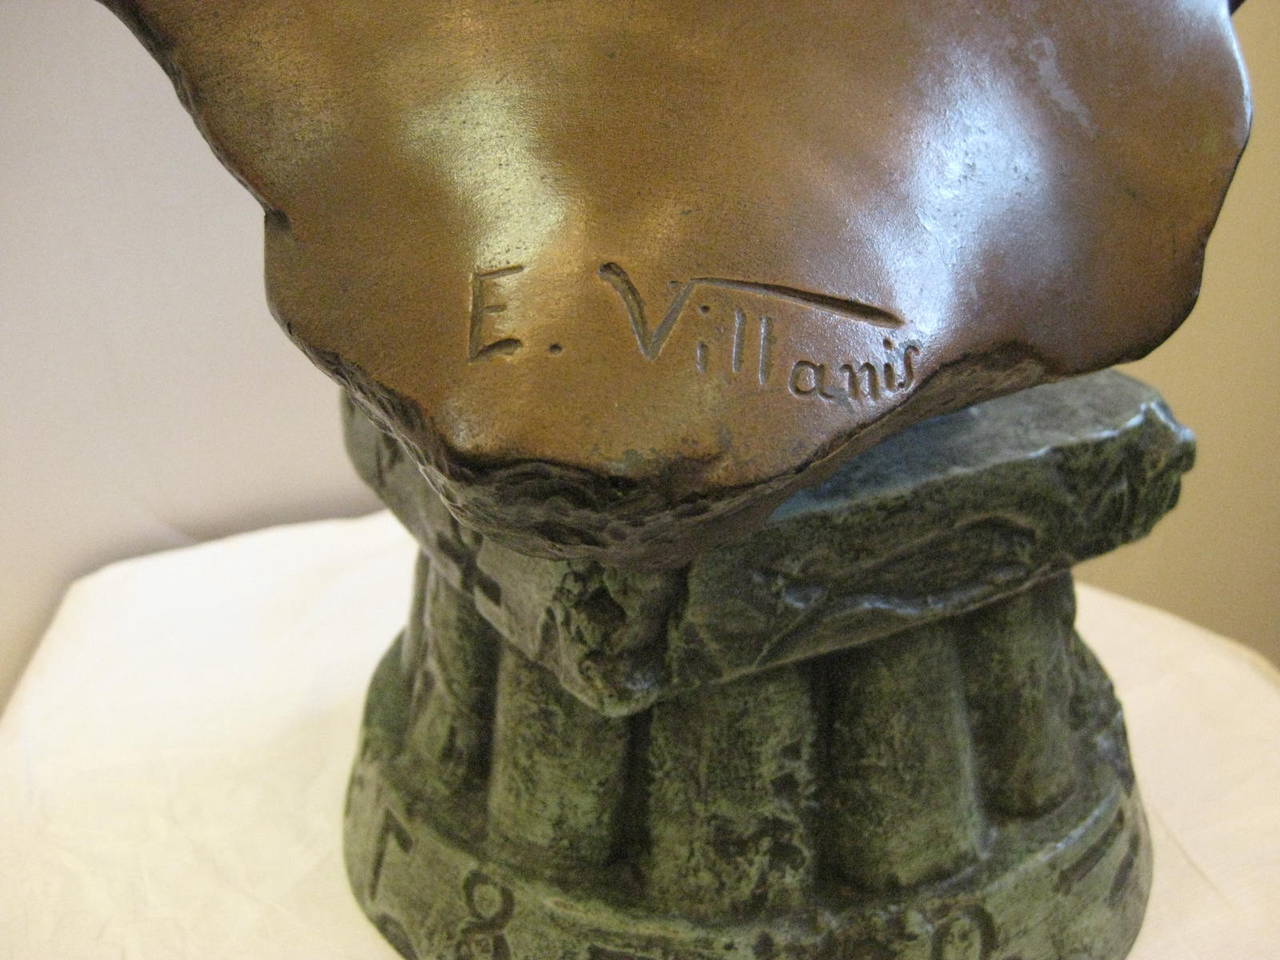 19th Century Original Polychrome Spelter Bust of a Woman Signed E. Villanis, circa 1890